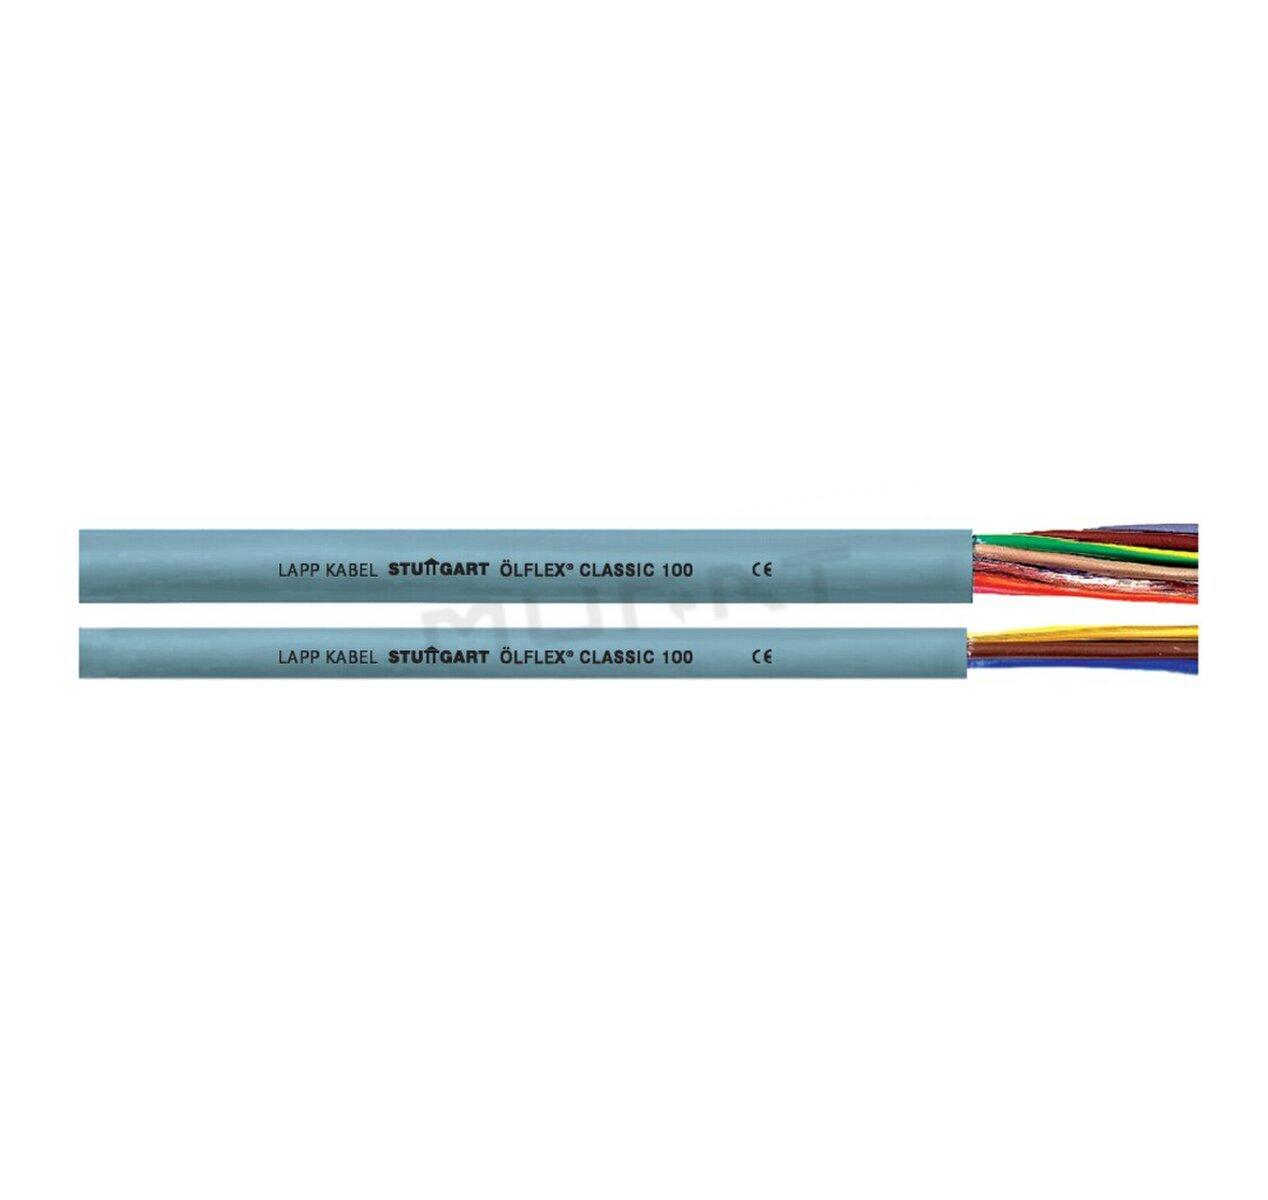 Kábel OLFLEX CLASSIC 100 4Gx4 mm2 450/750V